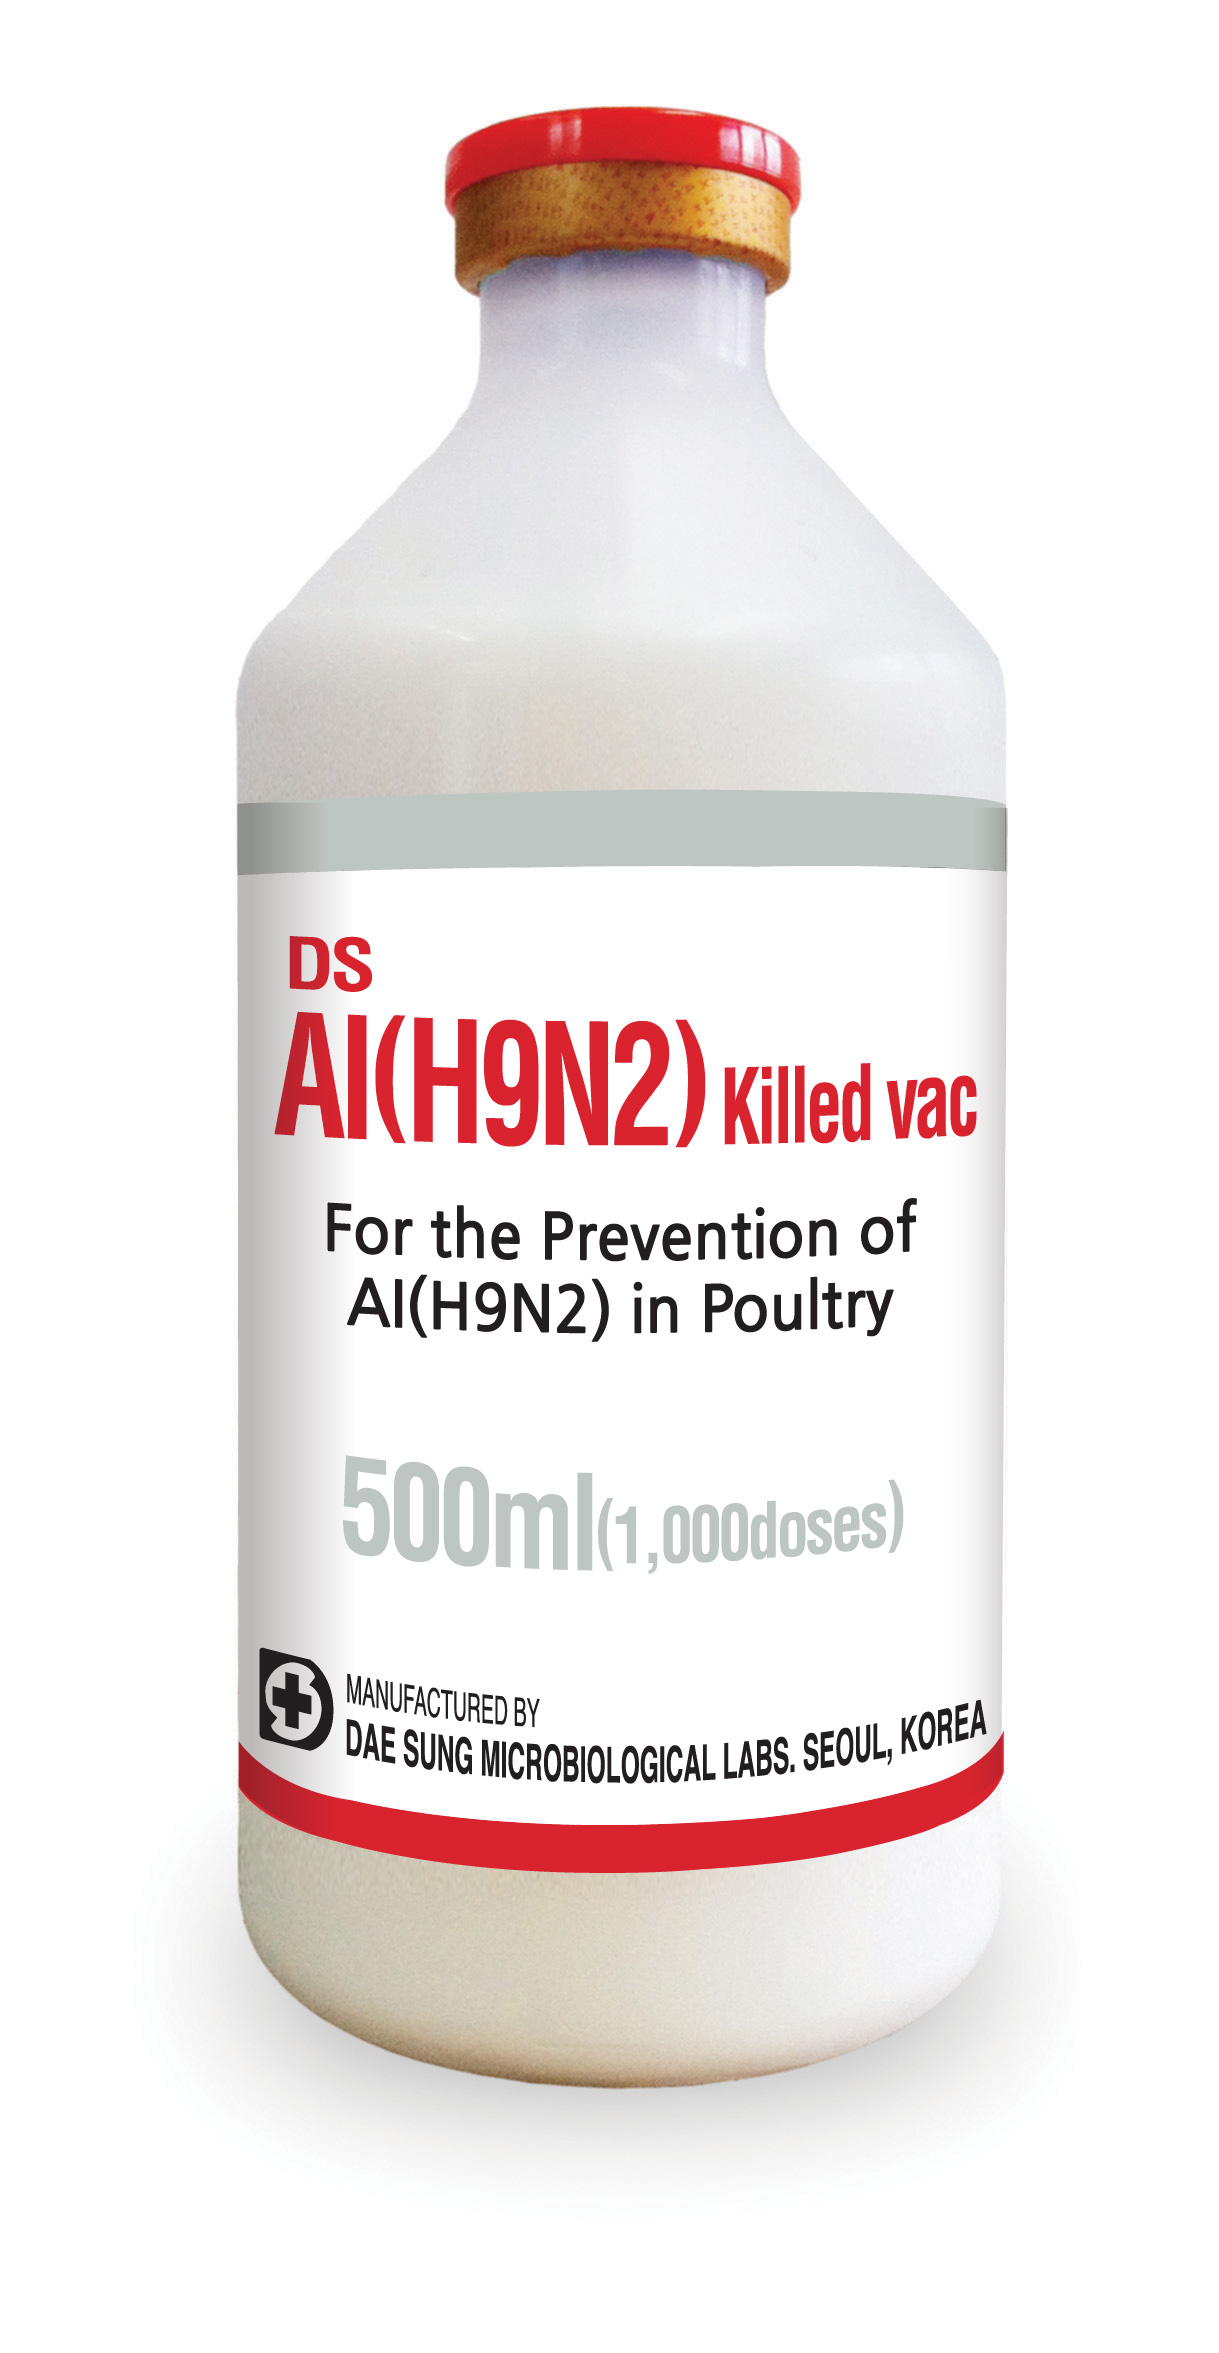 DS AI(H9N2) Killed Vac